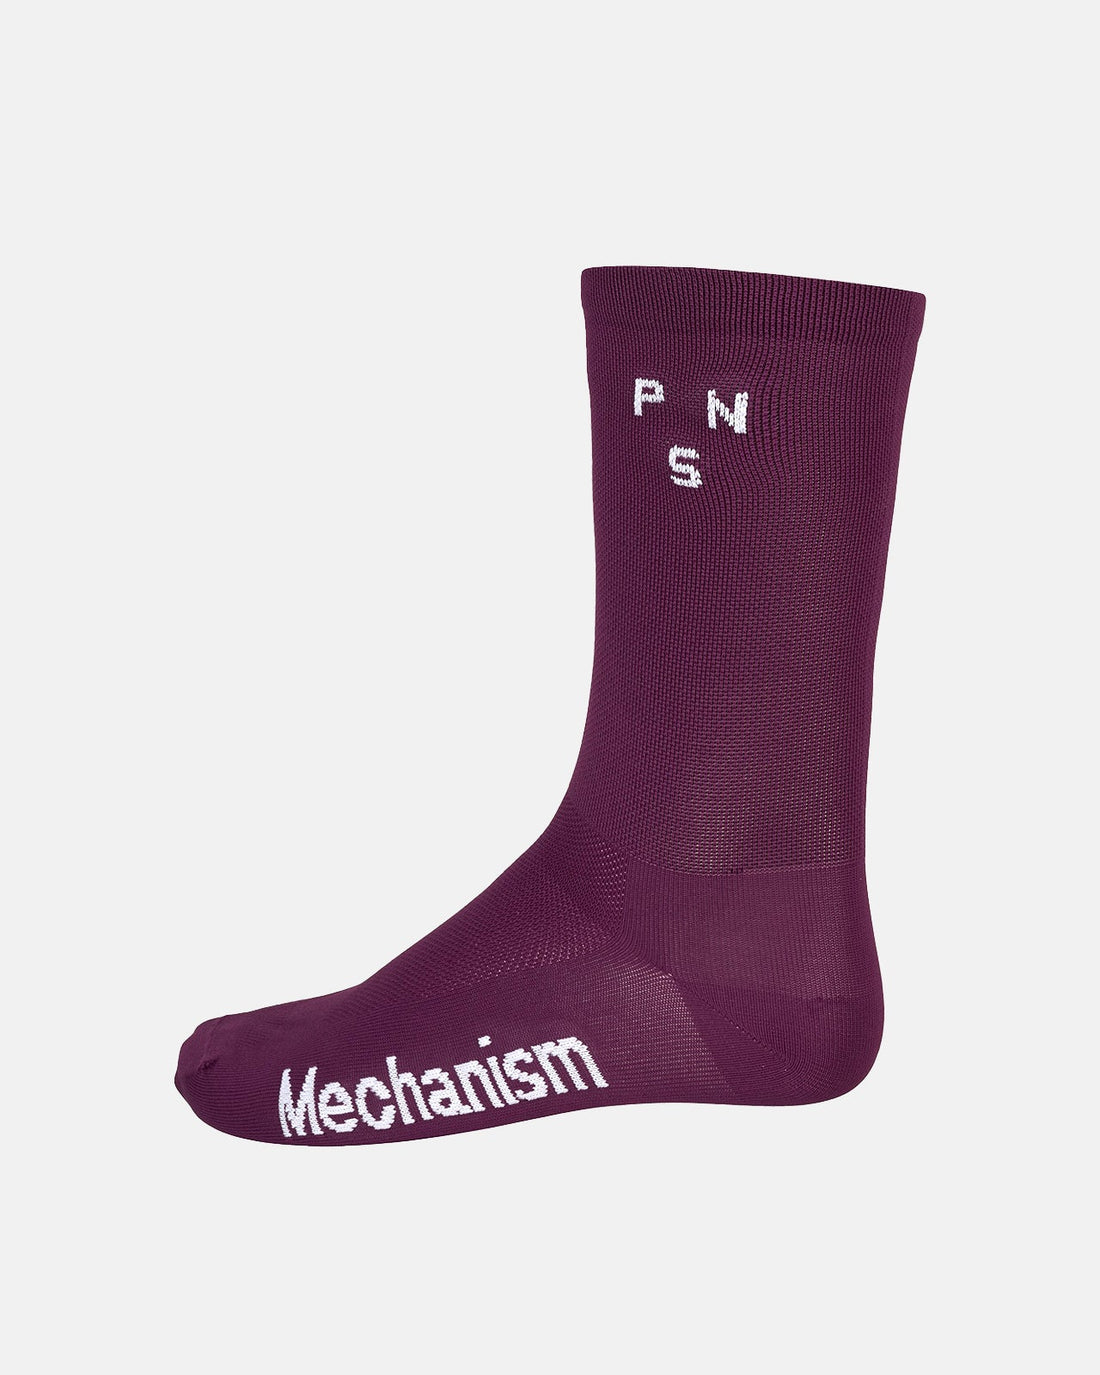 Mechanism Socks - Dark Purple - Pas Normal Studios